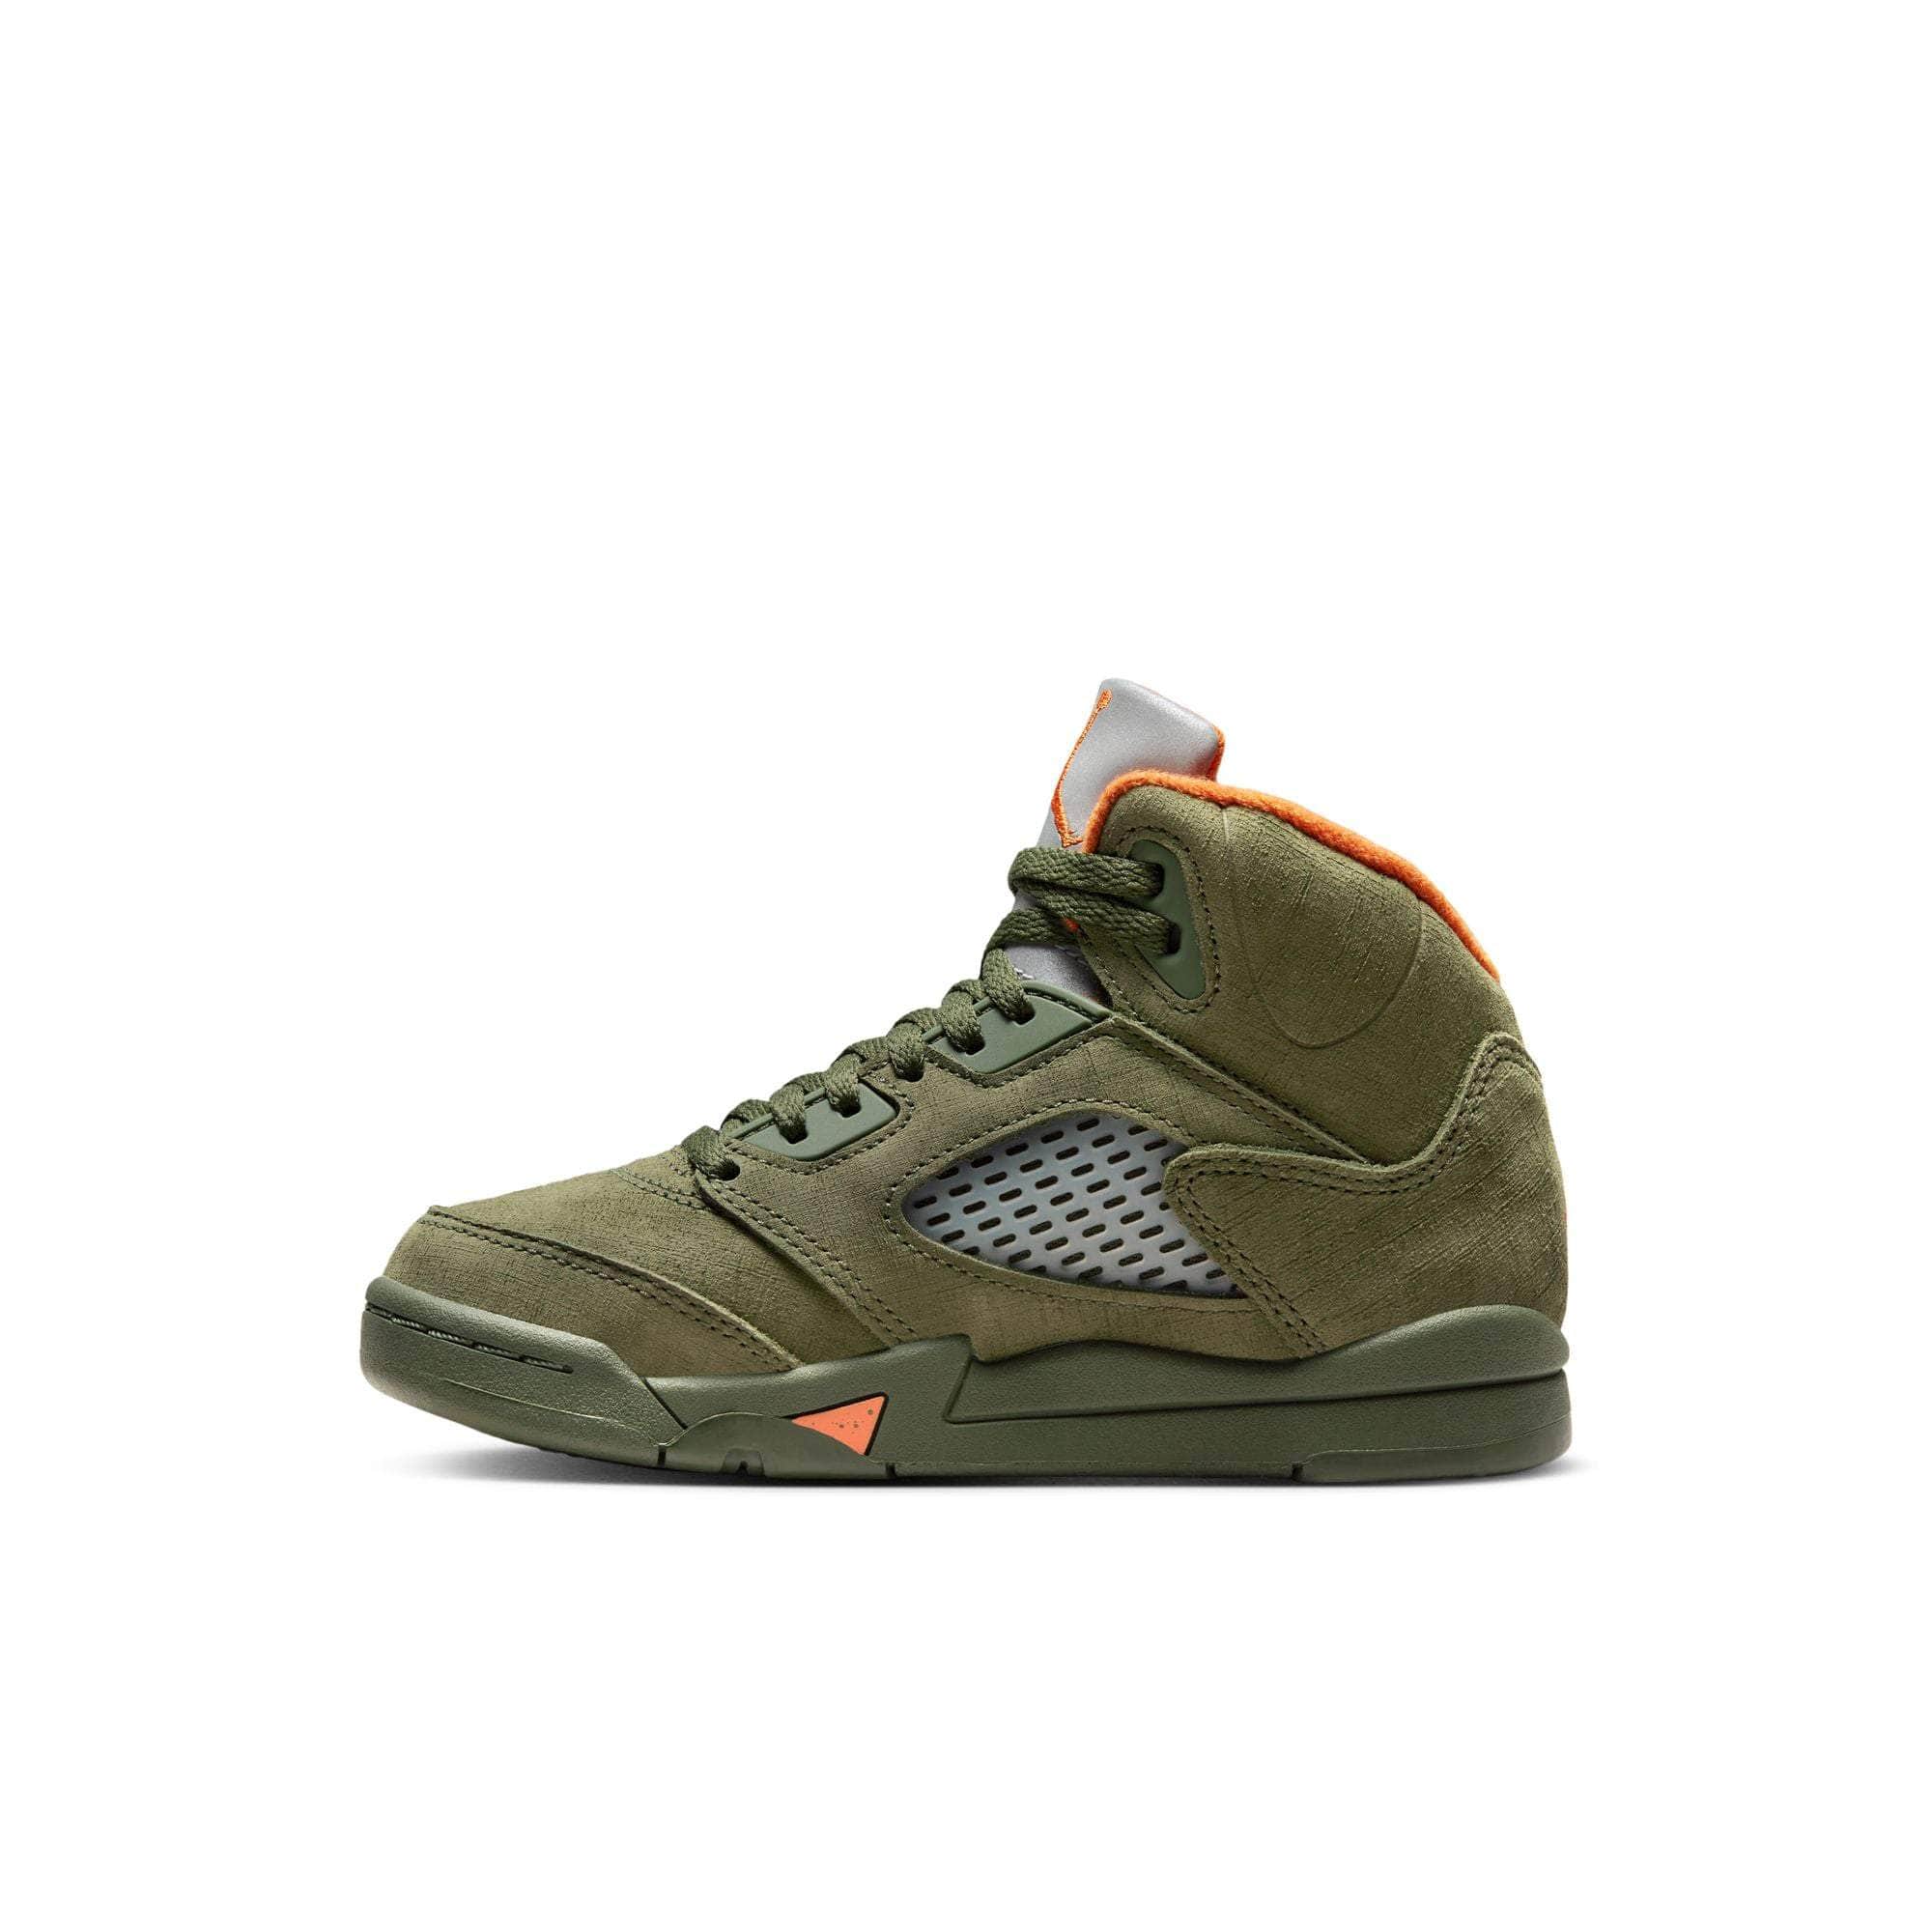 Air Jordan Footwear Air Jordan 5 Retro “Olive“ - Kid's PS